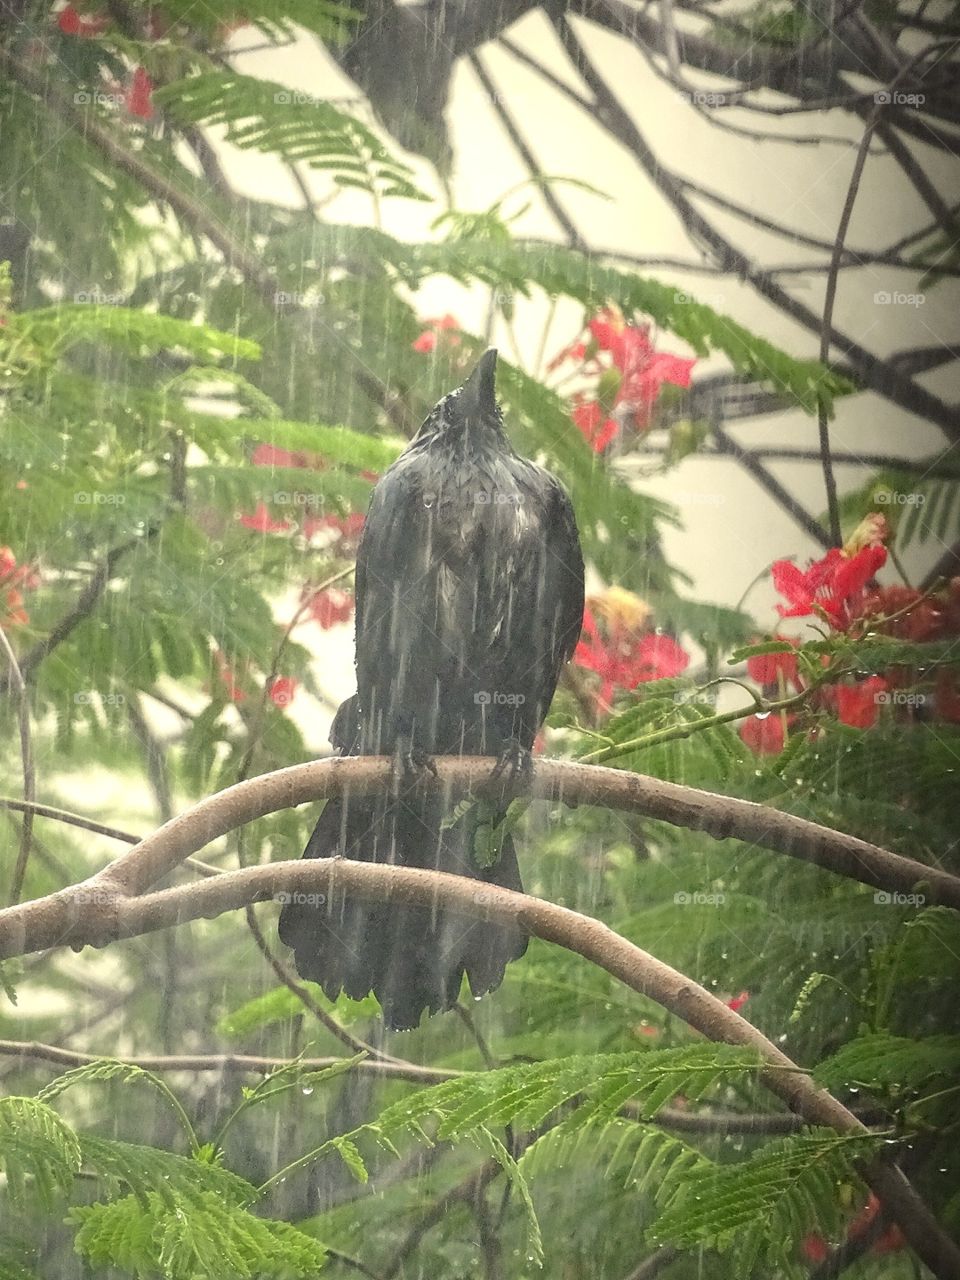 Unscared Crow Braving the Rain